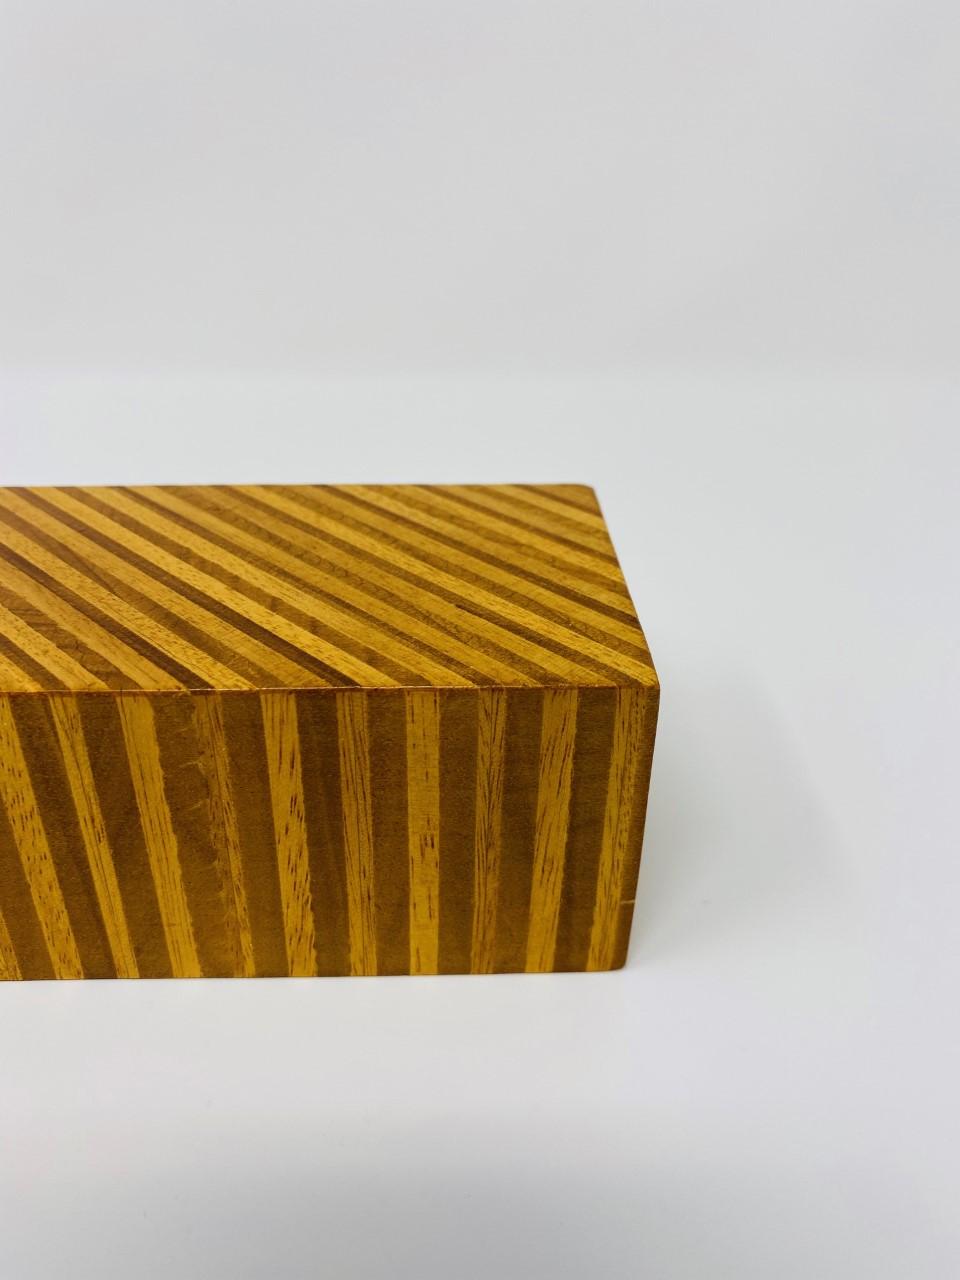 American Postmodern Memphis Style Mixed Wood Trinket Box